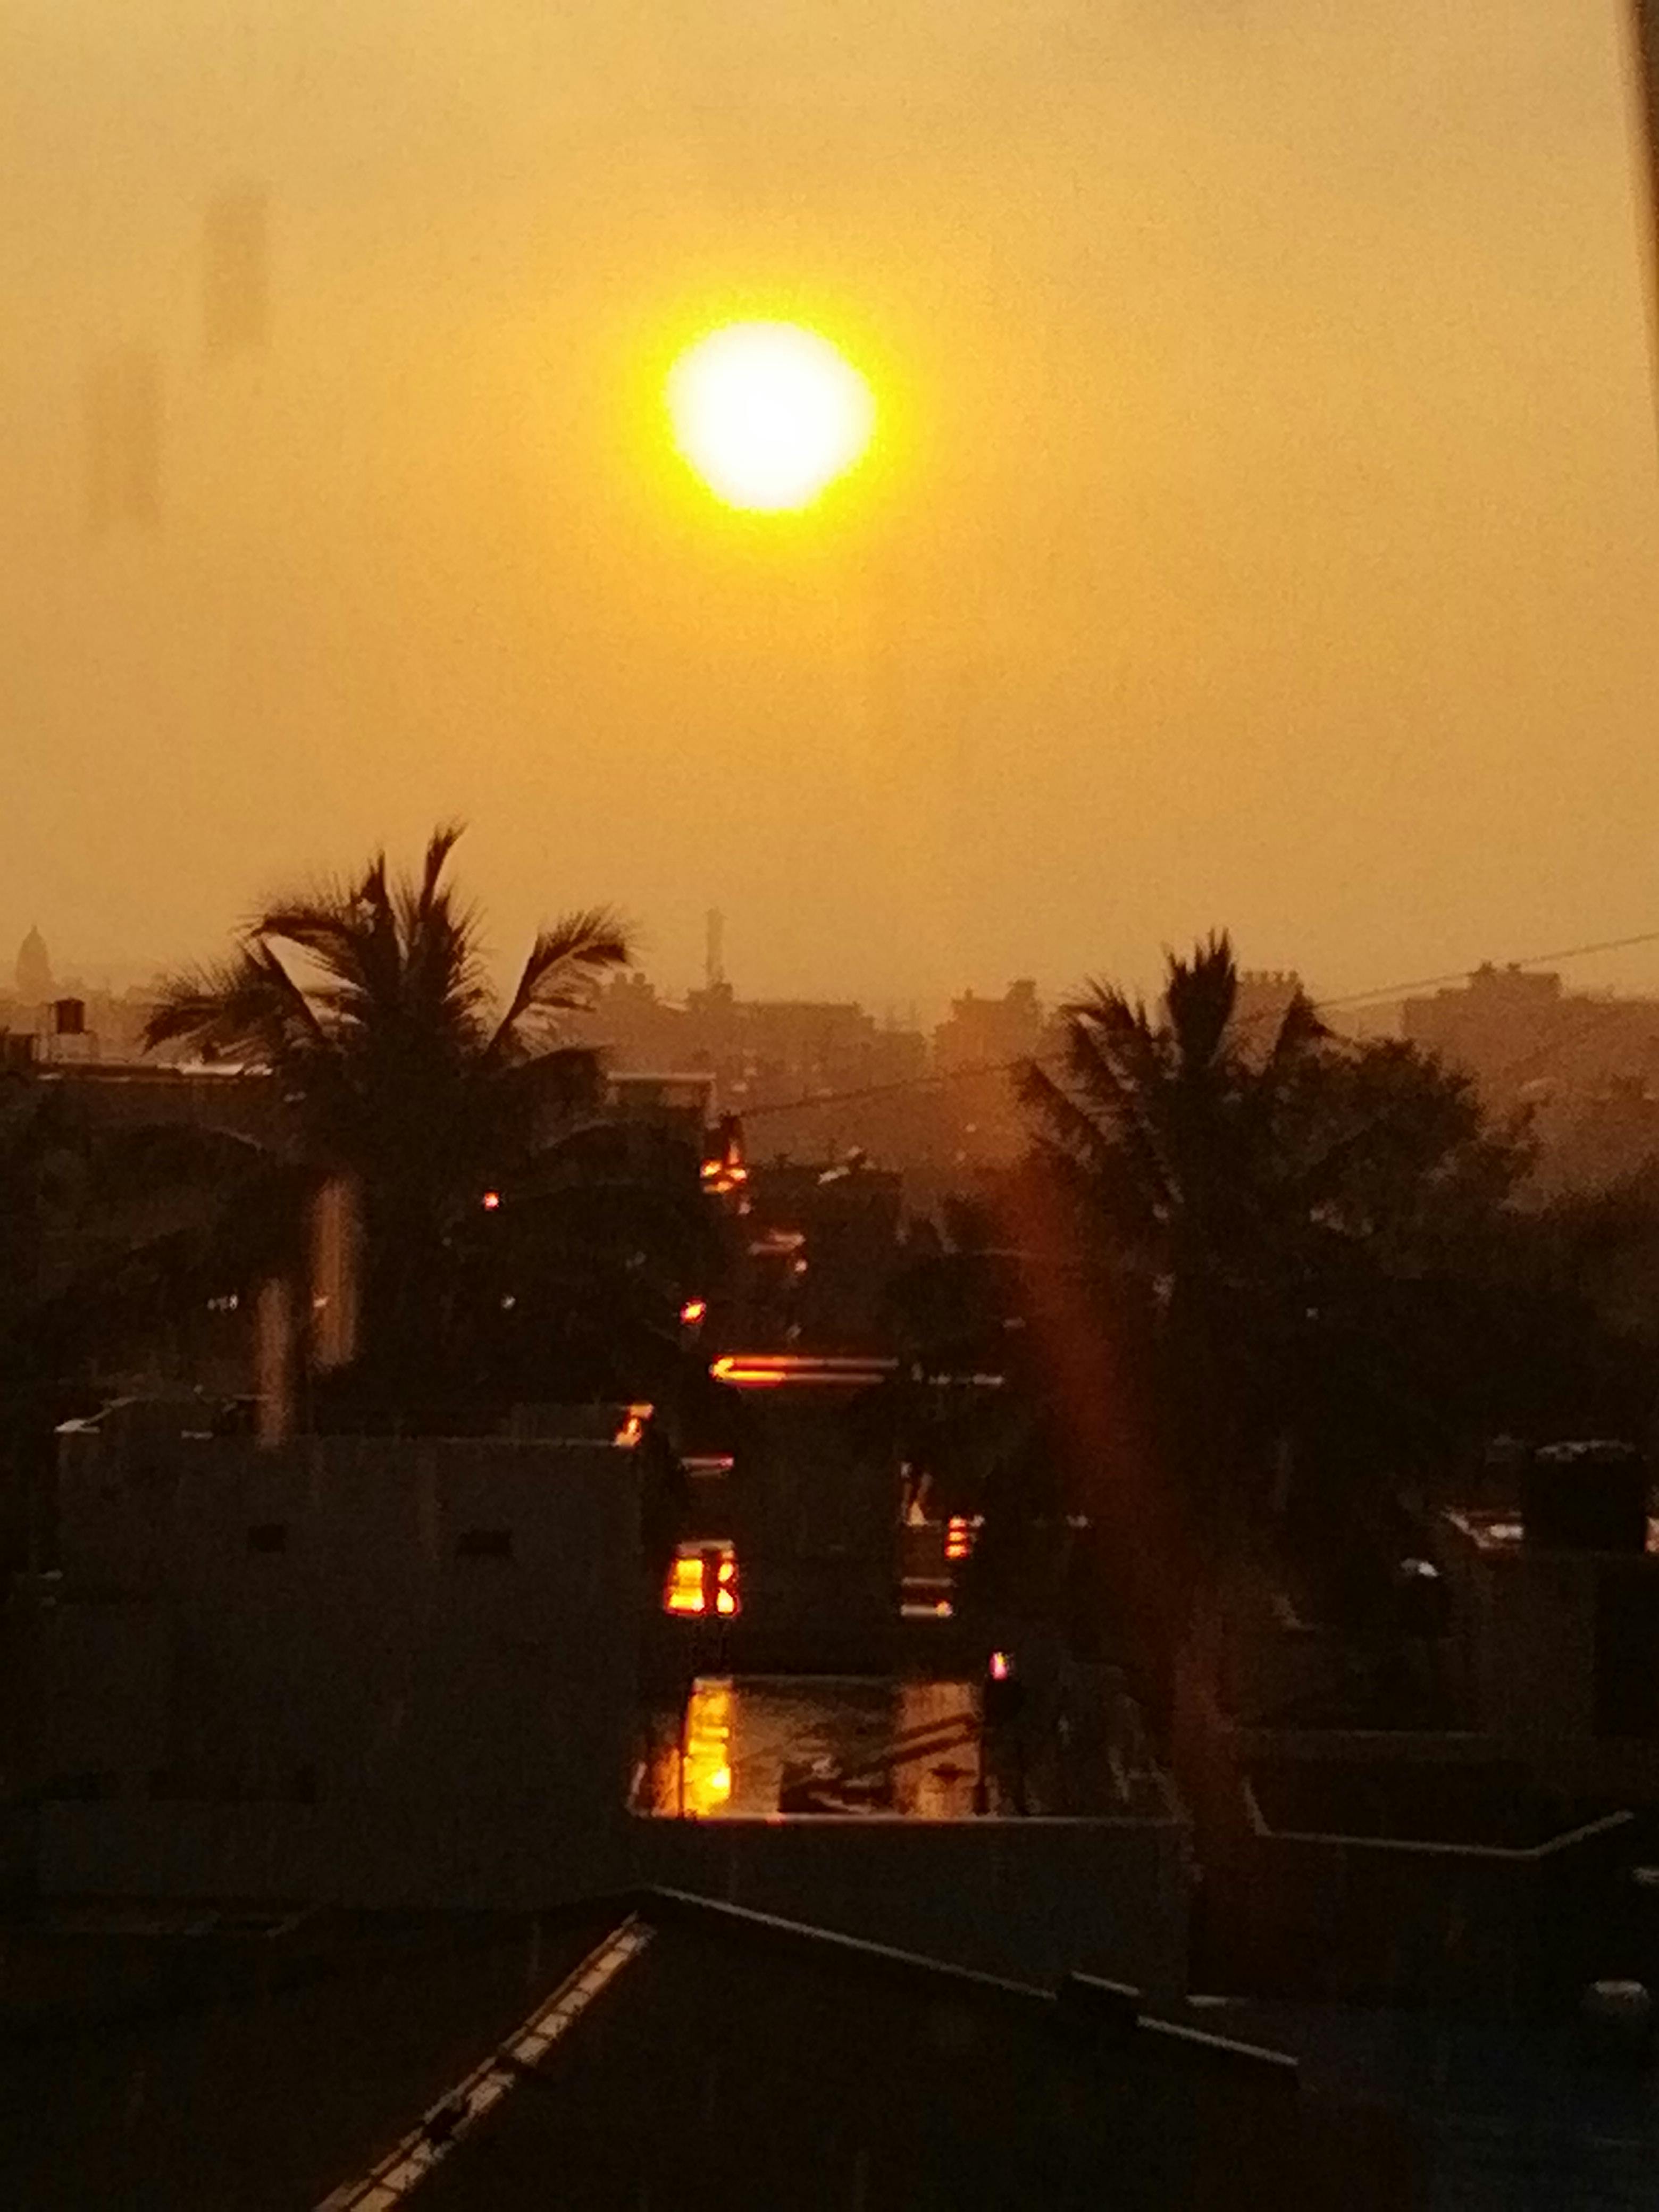 Free stock photo of Beatutiful view of Rain and Sun set Together